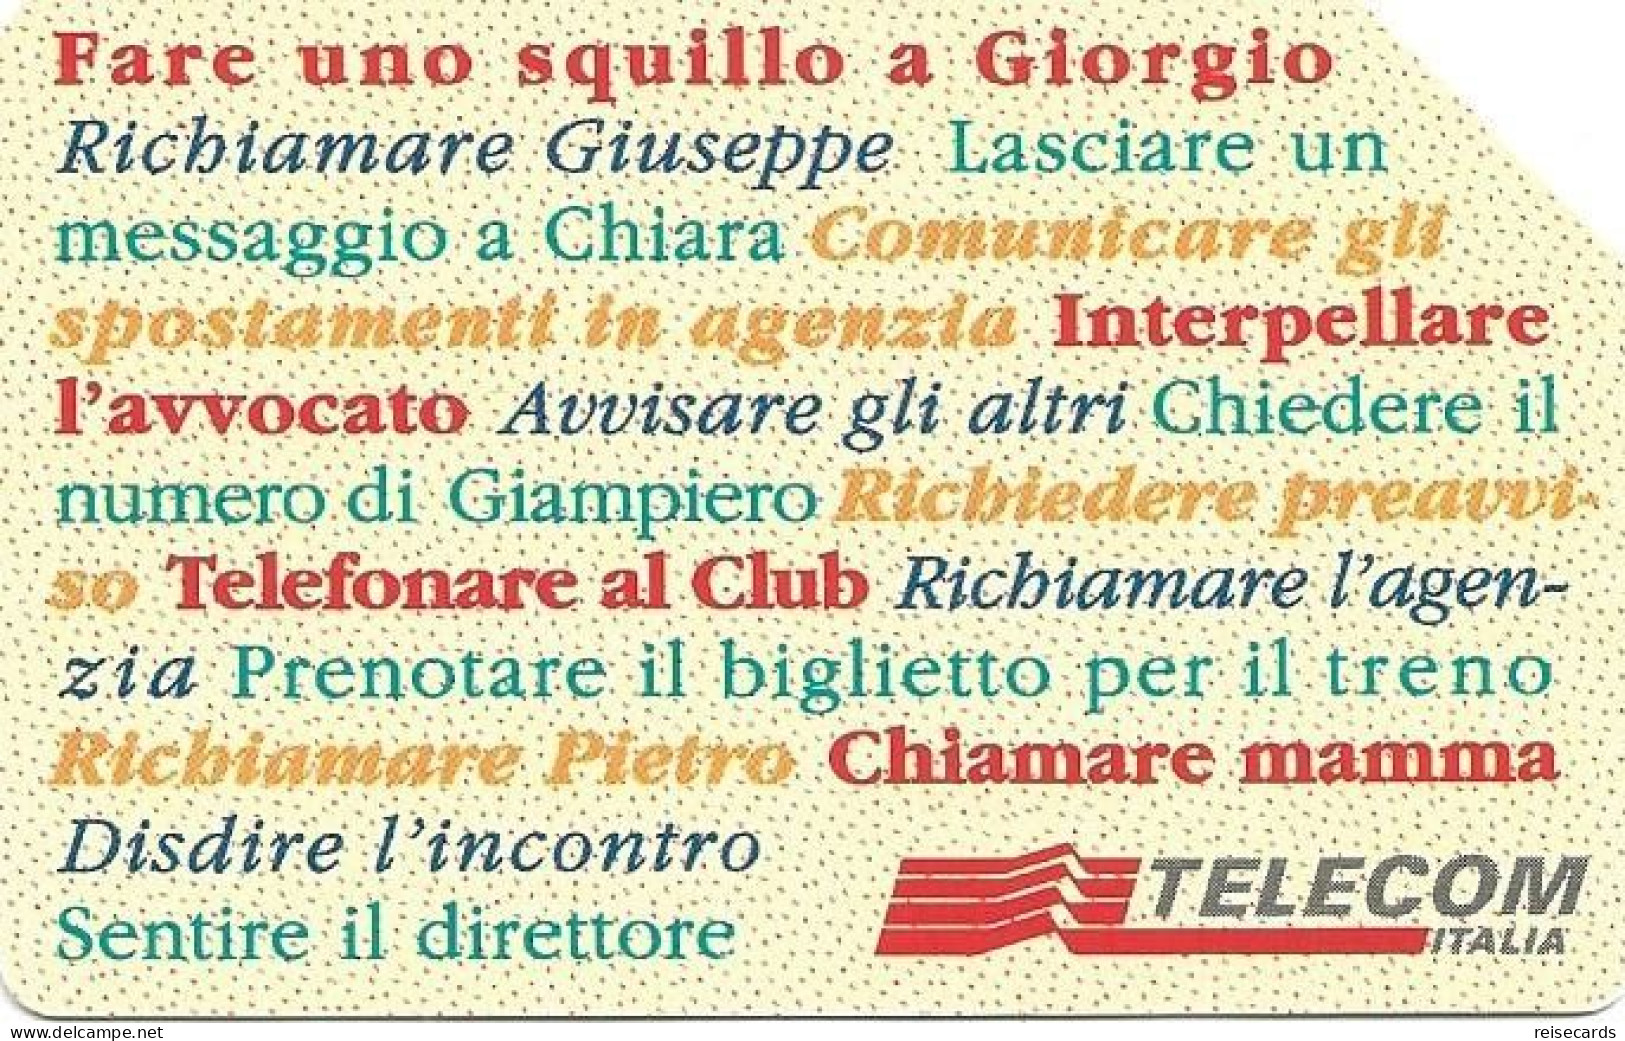 Italy: Telecom Italia - Storie Di Vita Quotidiana - Öff. Werbe-TK